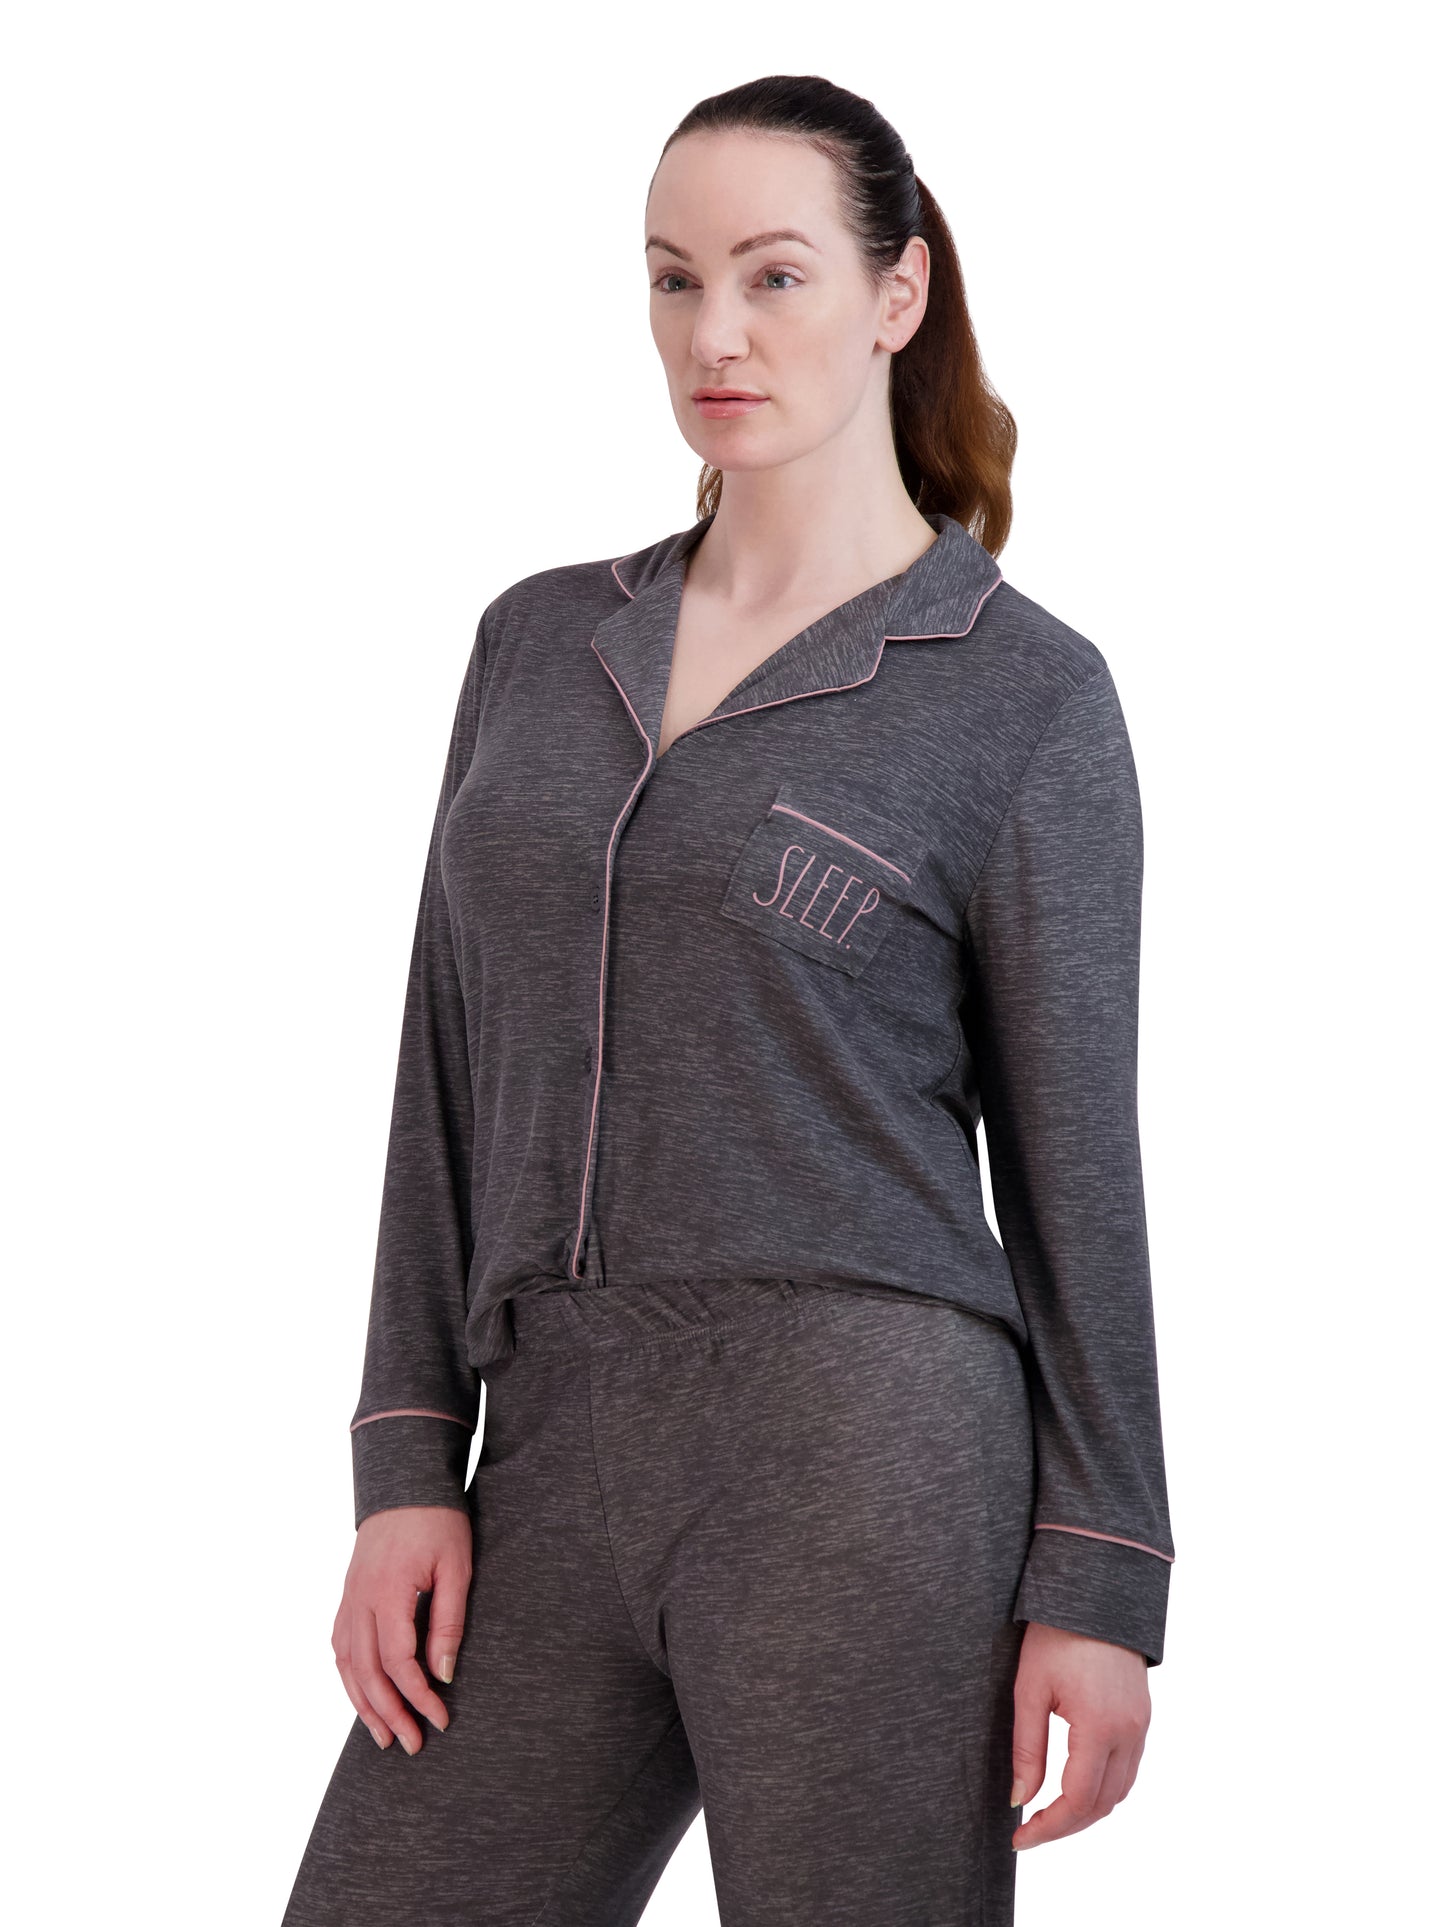 Women's "SLEEP" Long Sleeve Notch Collar Top and Tapered Pants Pajama Set - Rae Dunn Wear - W Pants Set